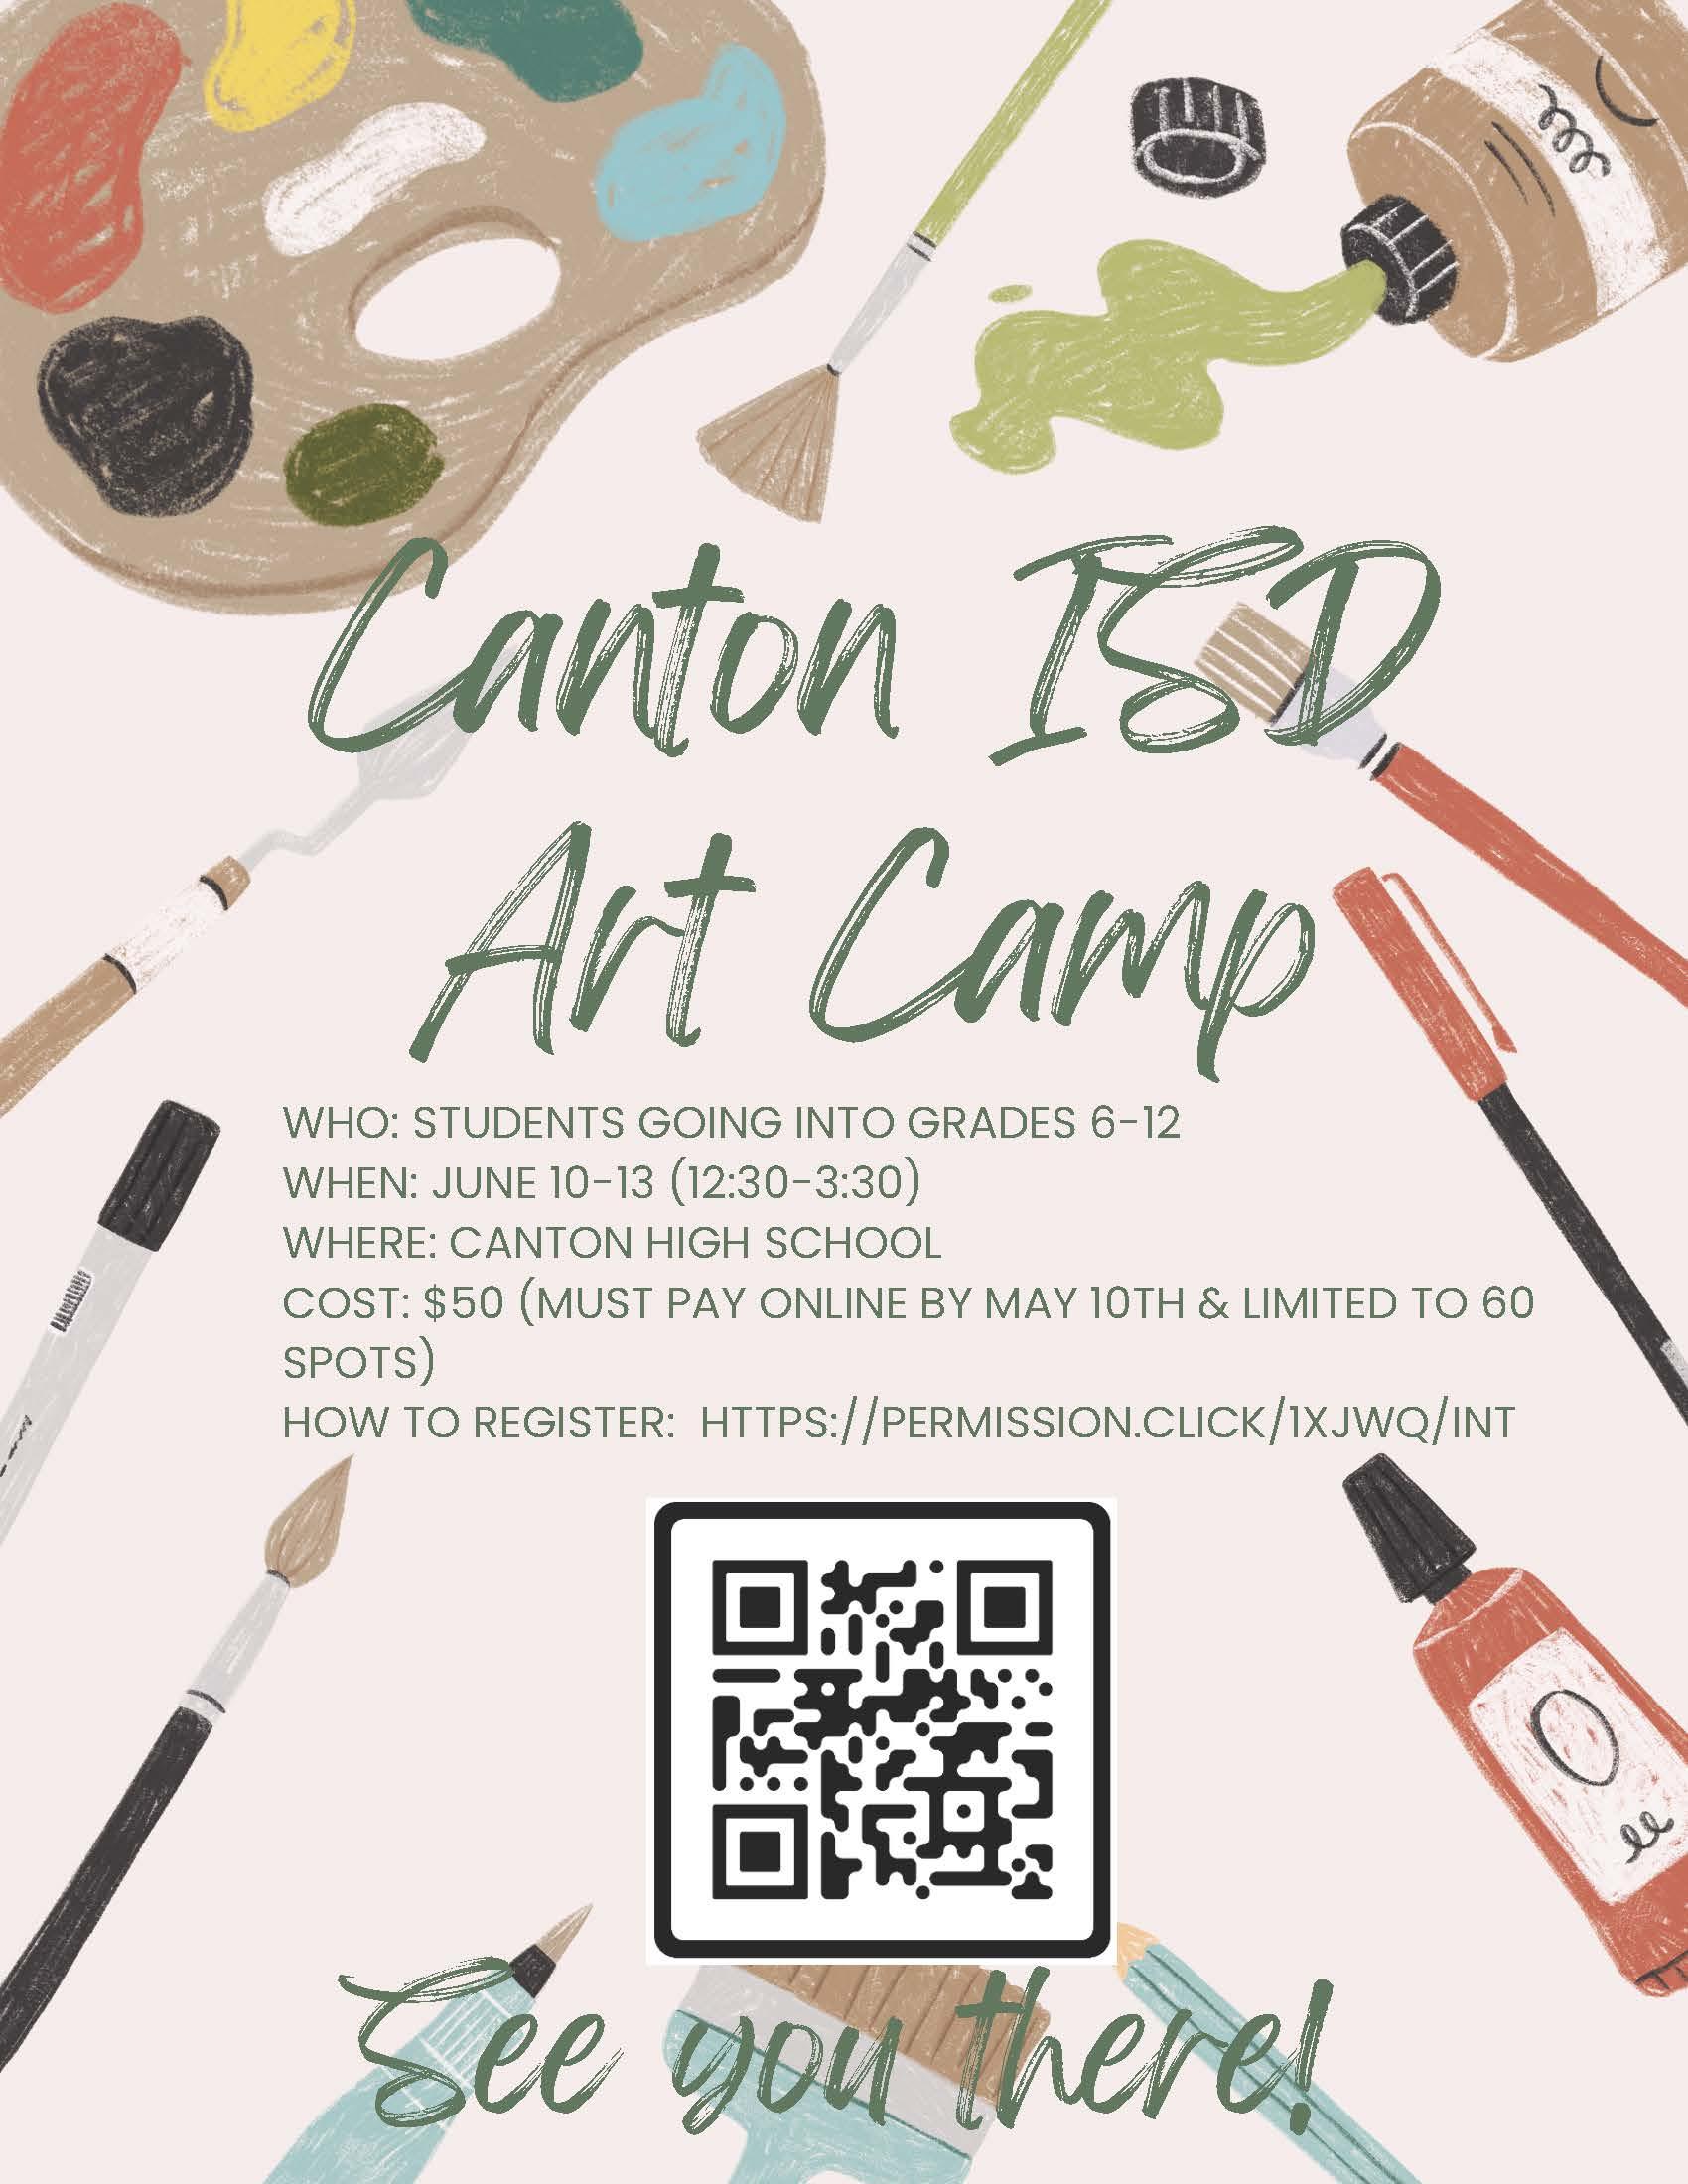 Canton ISD Art Camp